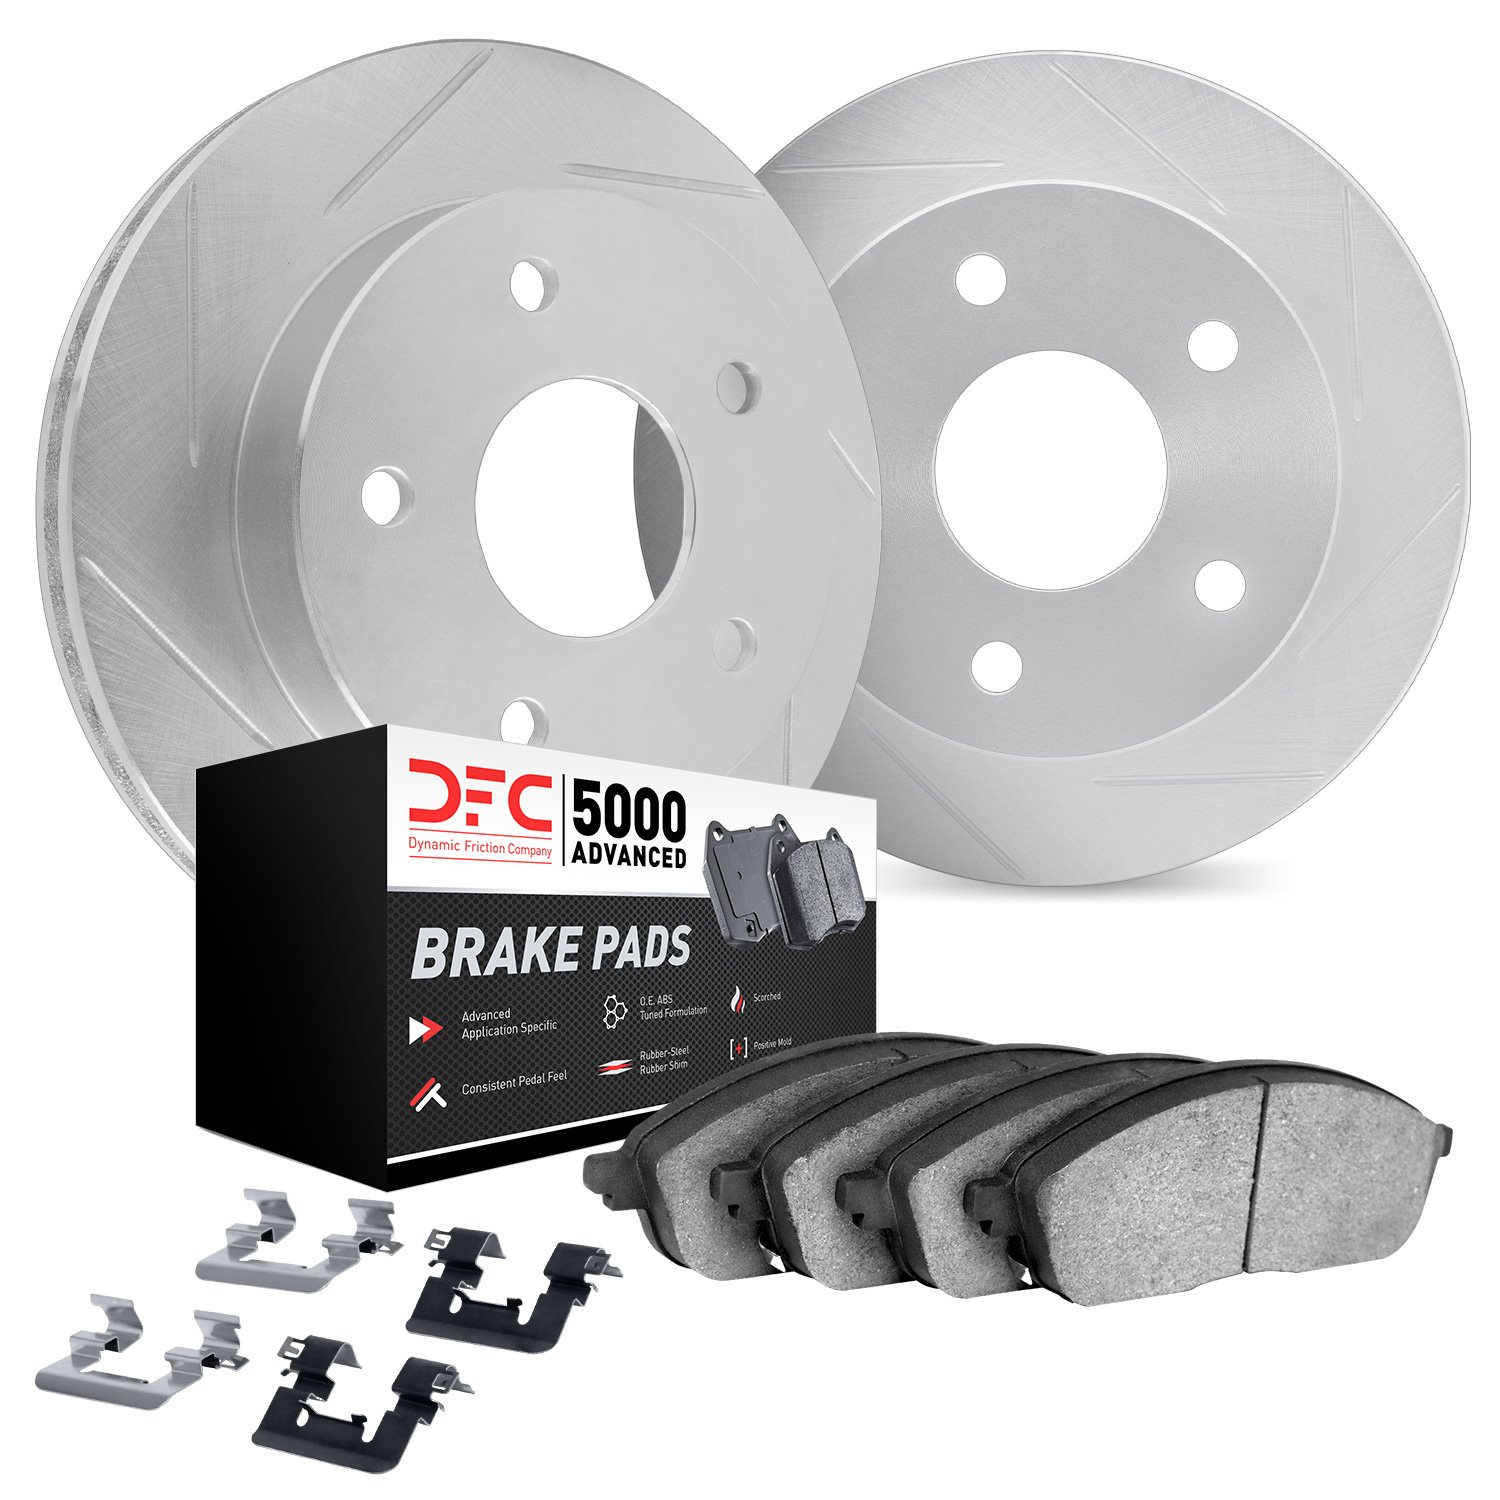 5512-54214 Slotted Brake Rotors w/5000 Advanced Brake Pads Kit & Hardware [Silver], 2013-2019 Ford/Lincoln/Mercury/Mazda, Positi